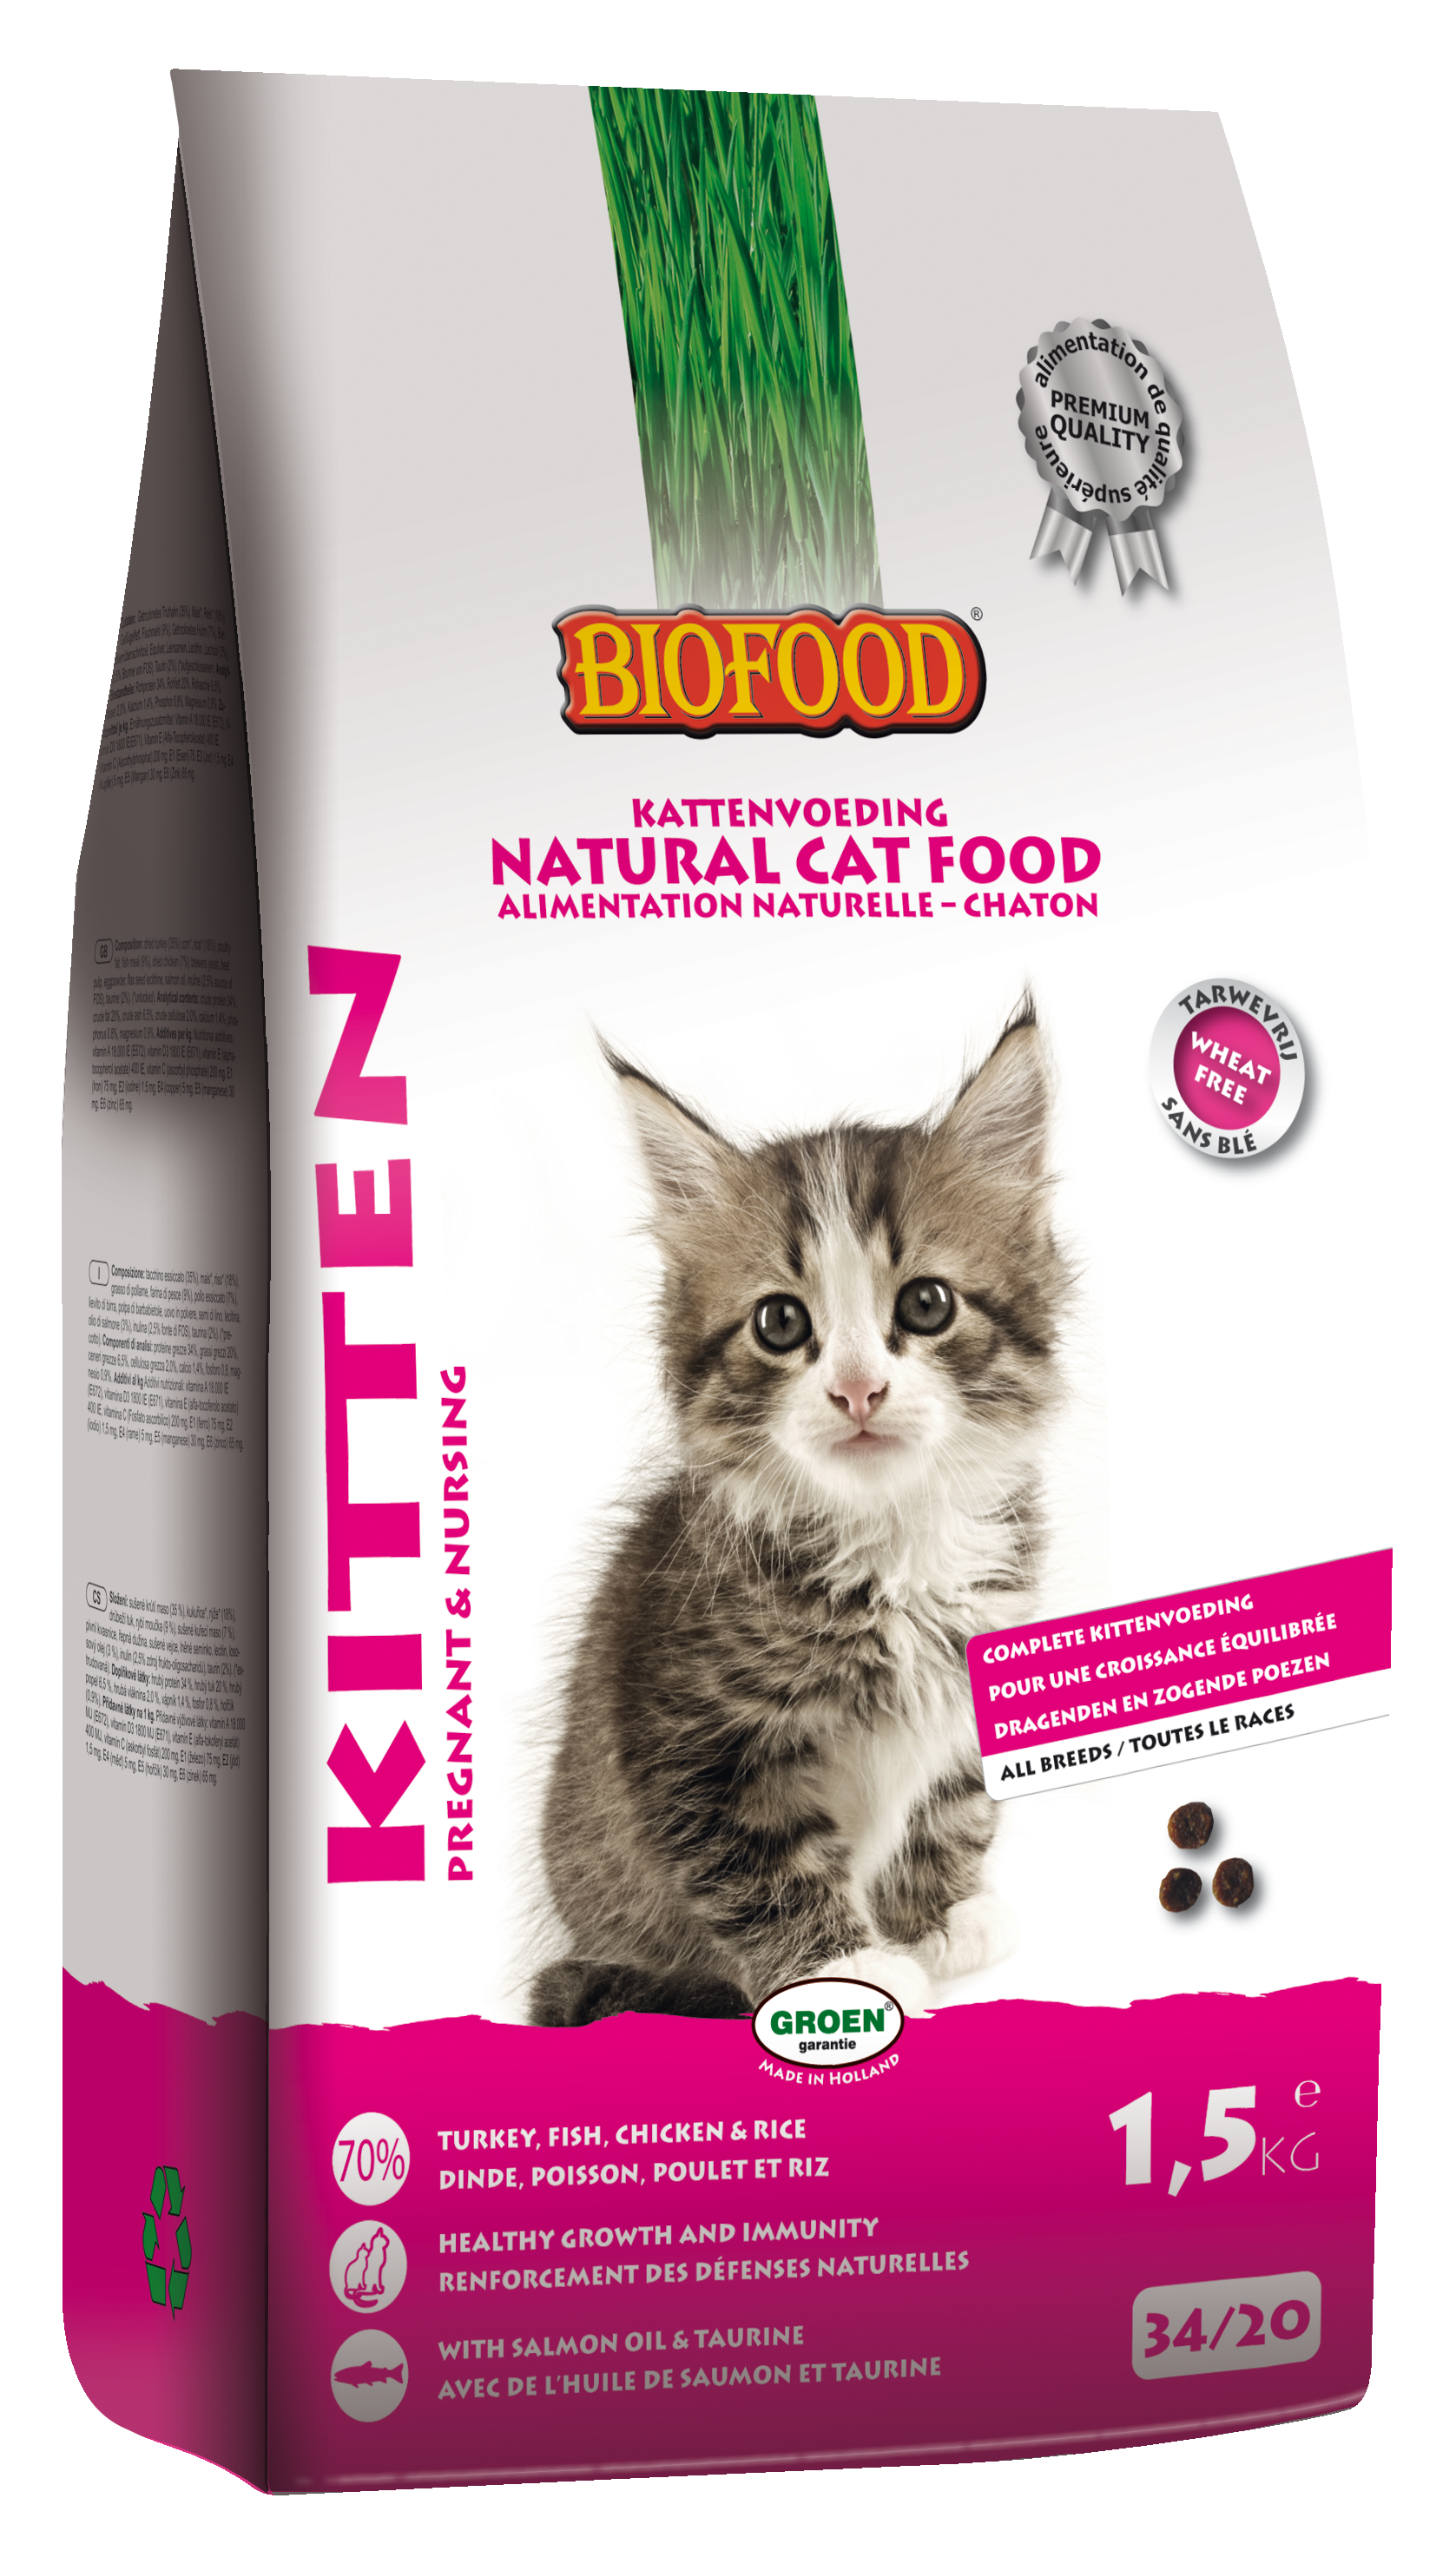 Biofood Kitten 1,5 kg Dierspeciaalmagazijn. Complete dierspeciaalzaak